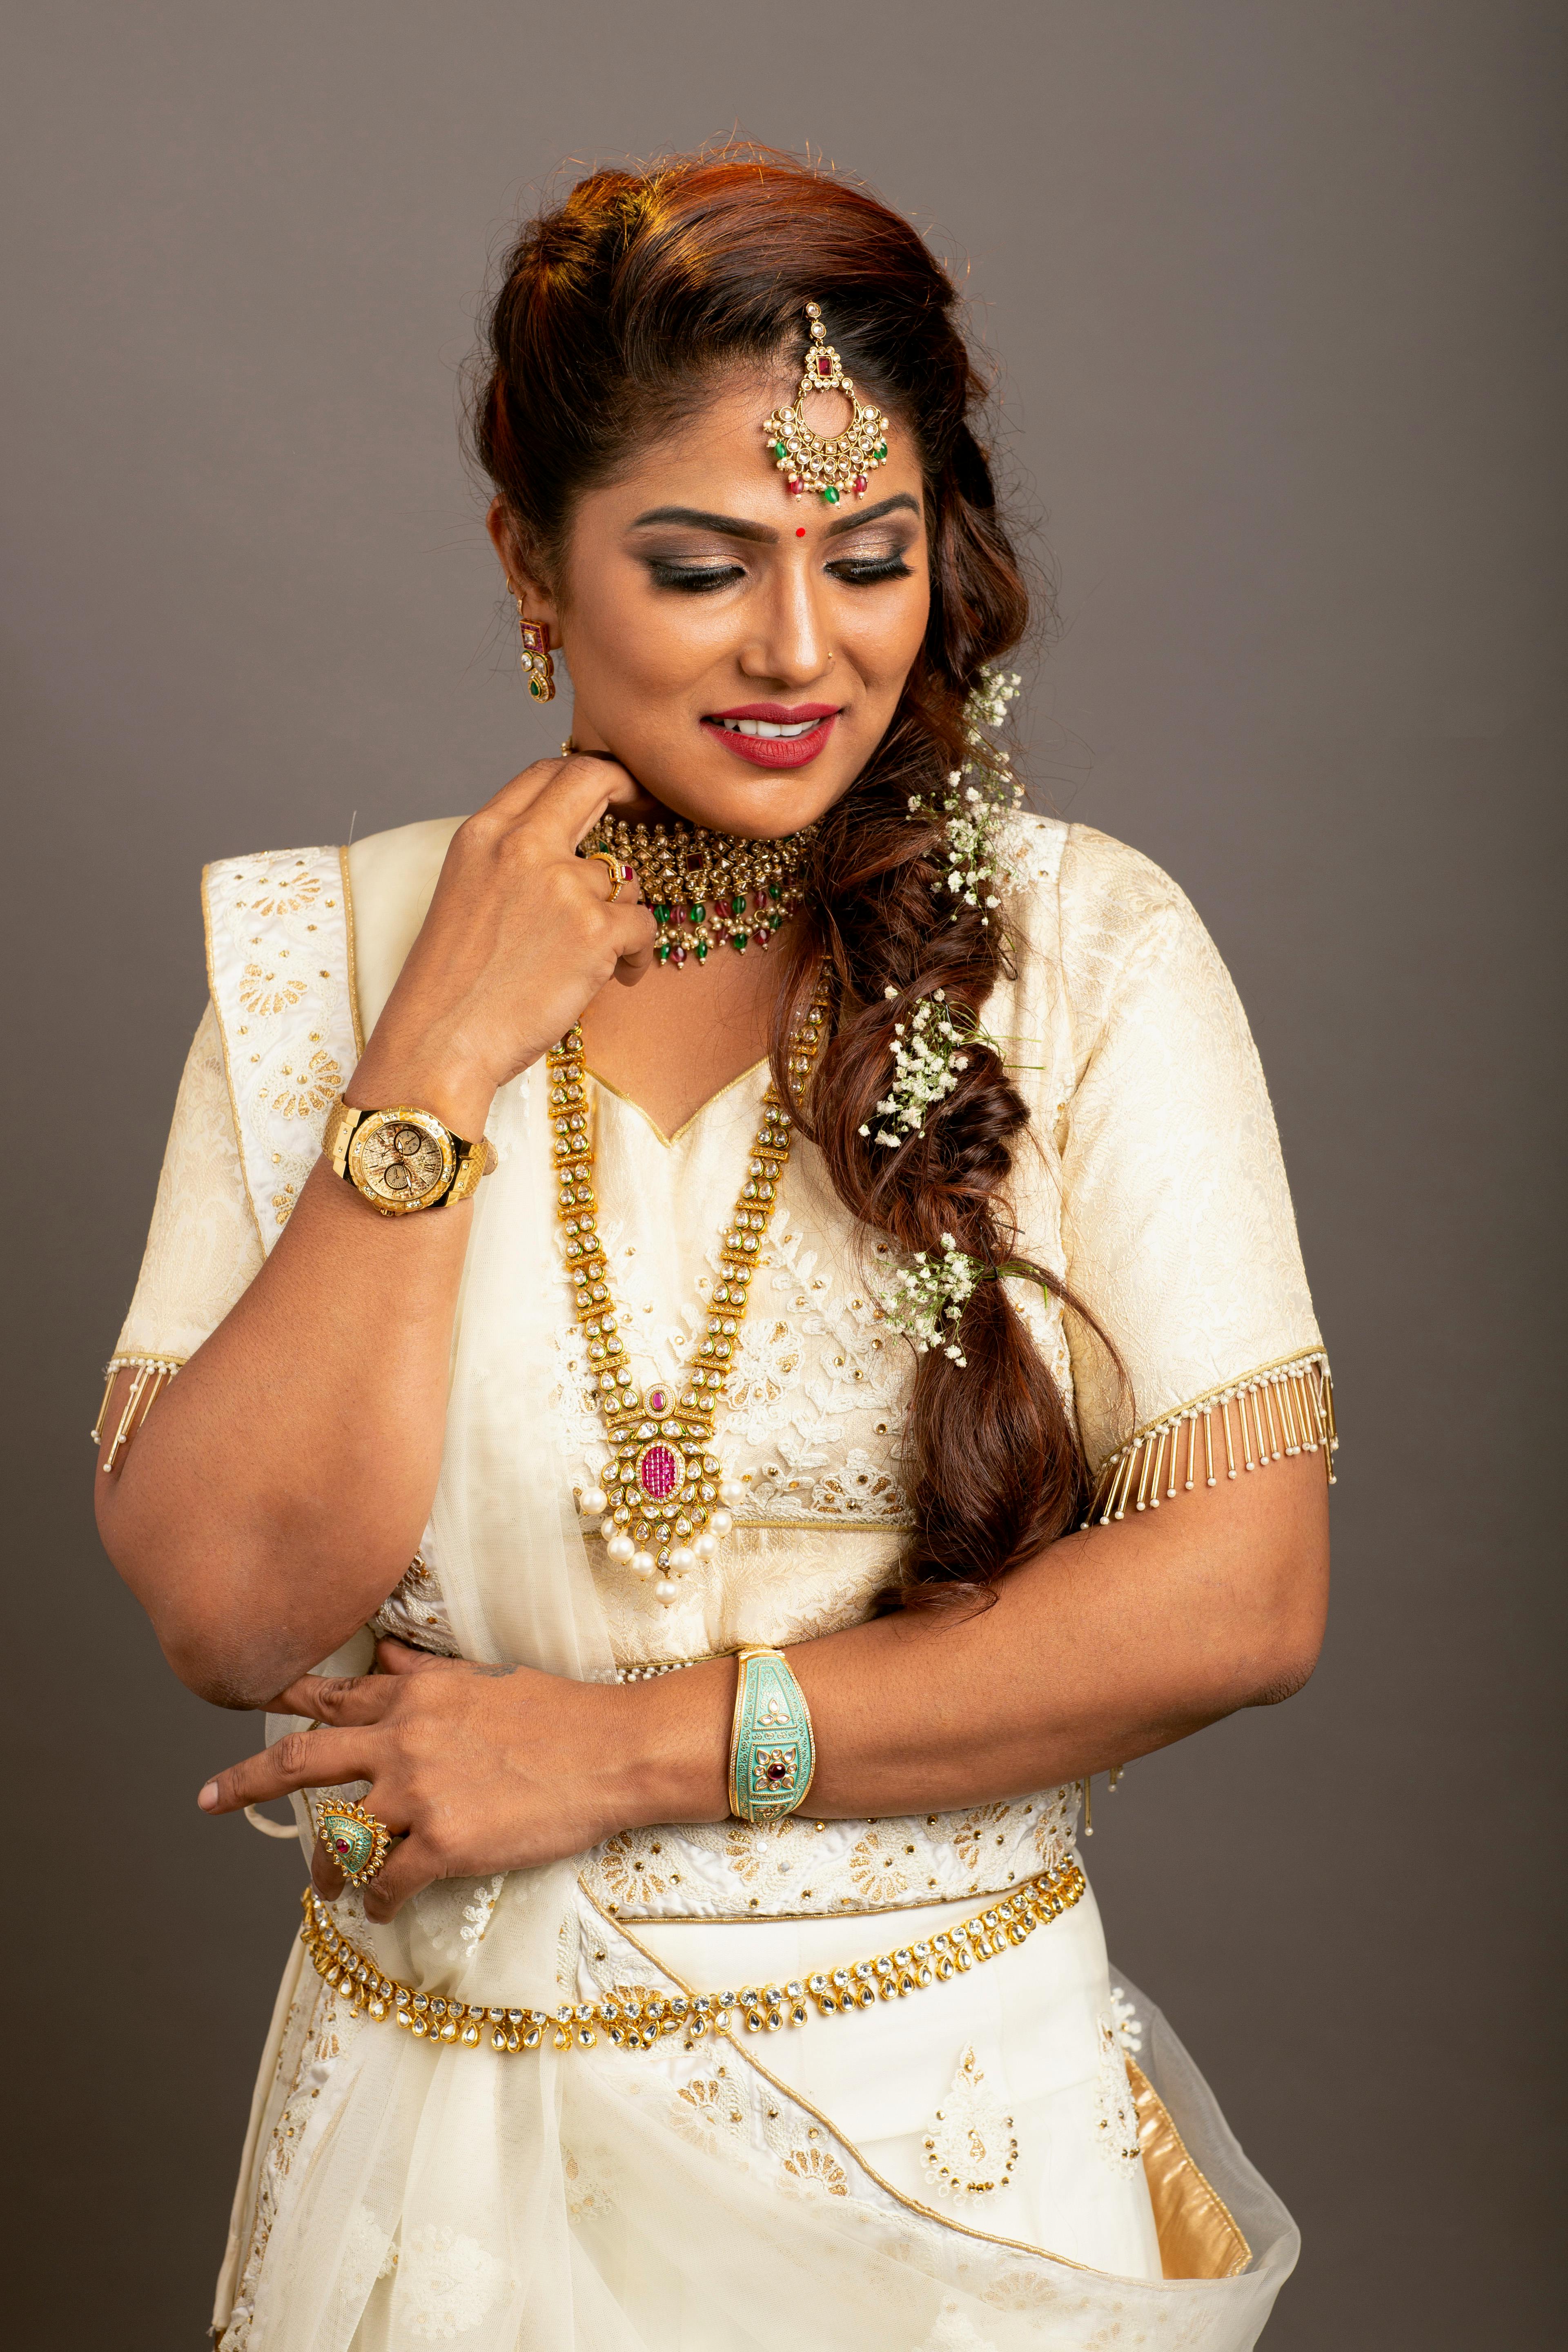 Samantha Ruth Prabhu In White Sheer Saree And Designer Blouse Is A Diva